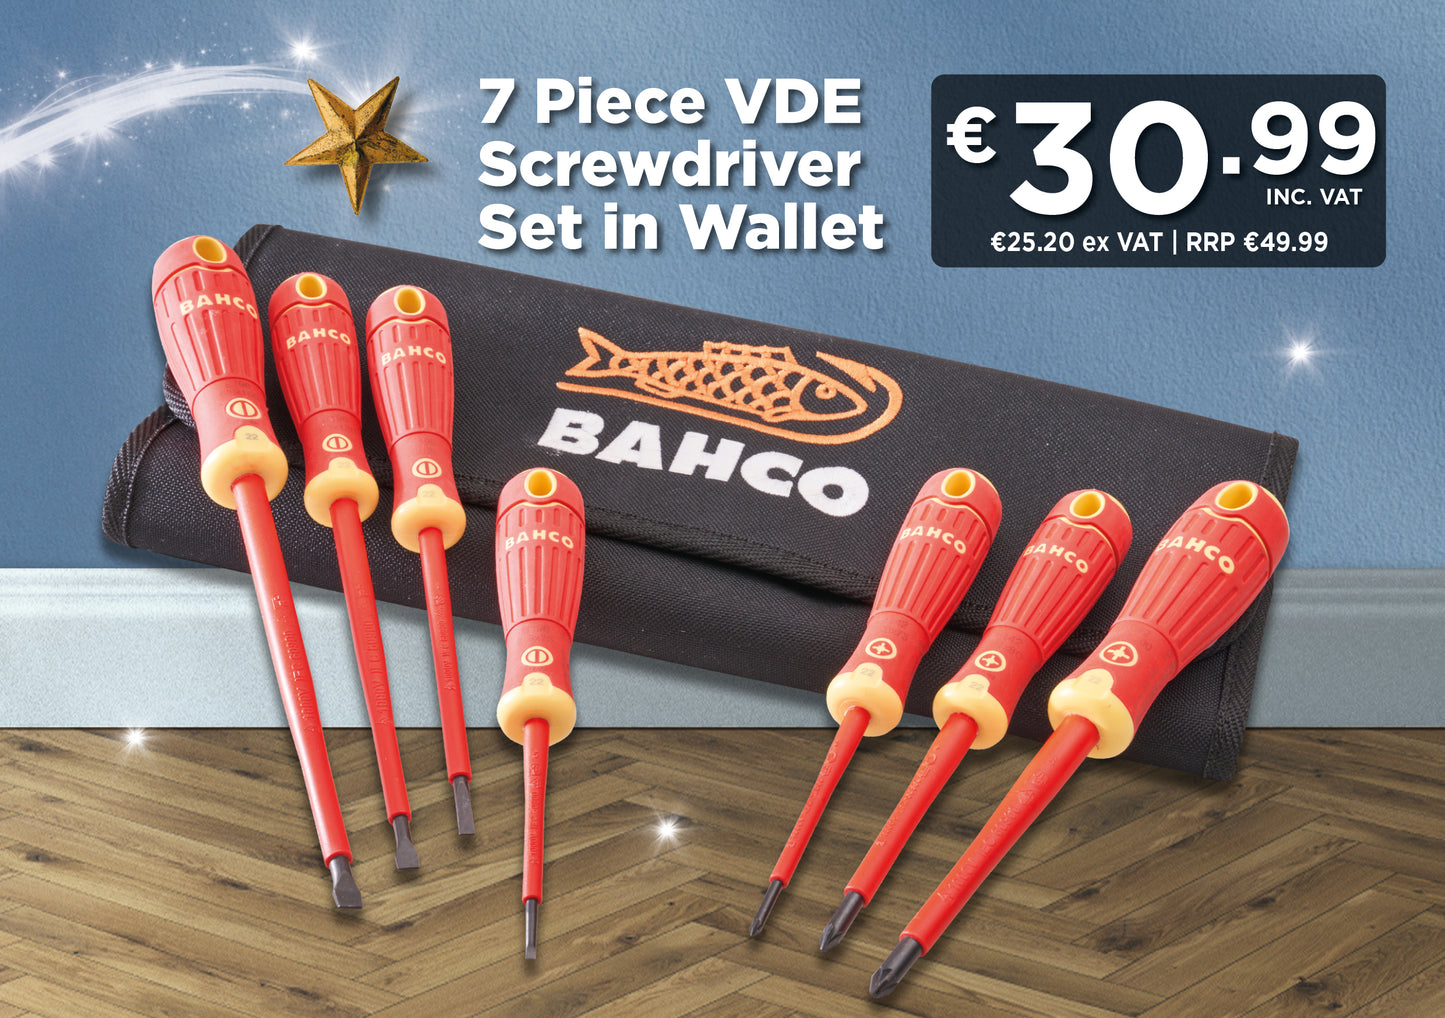 Bahco 7 Piece VDE Screwdriver Set + Wallet